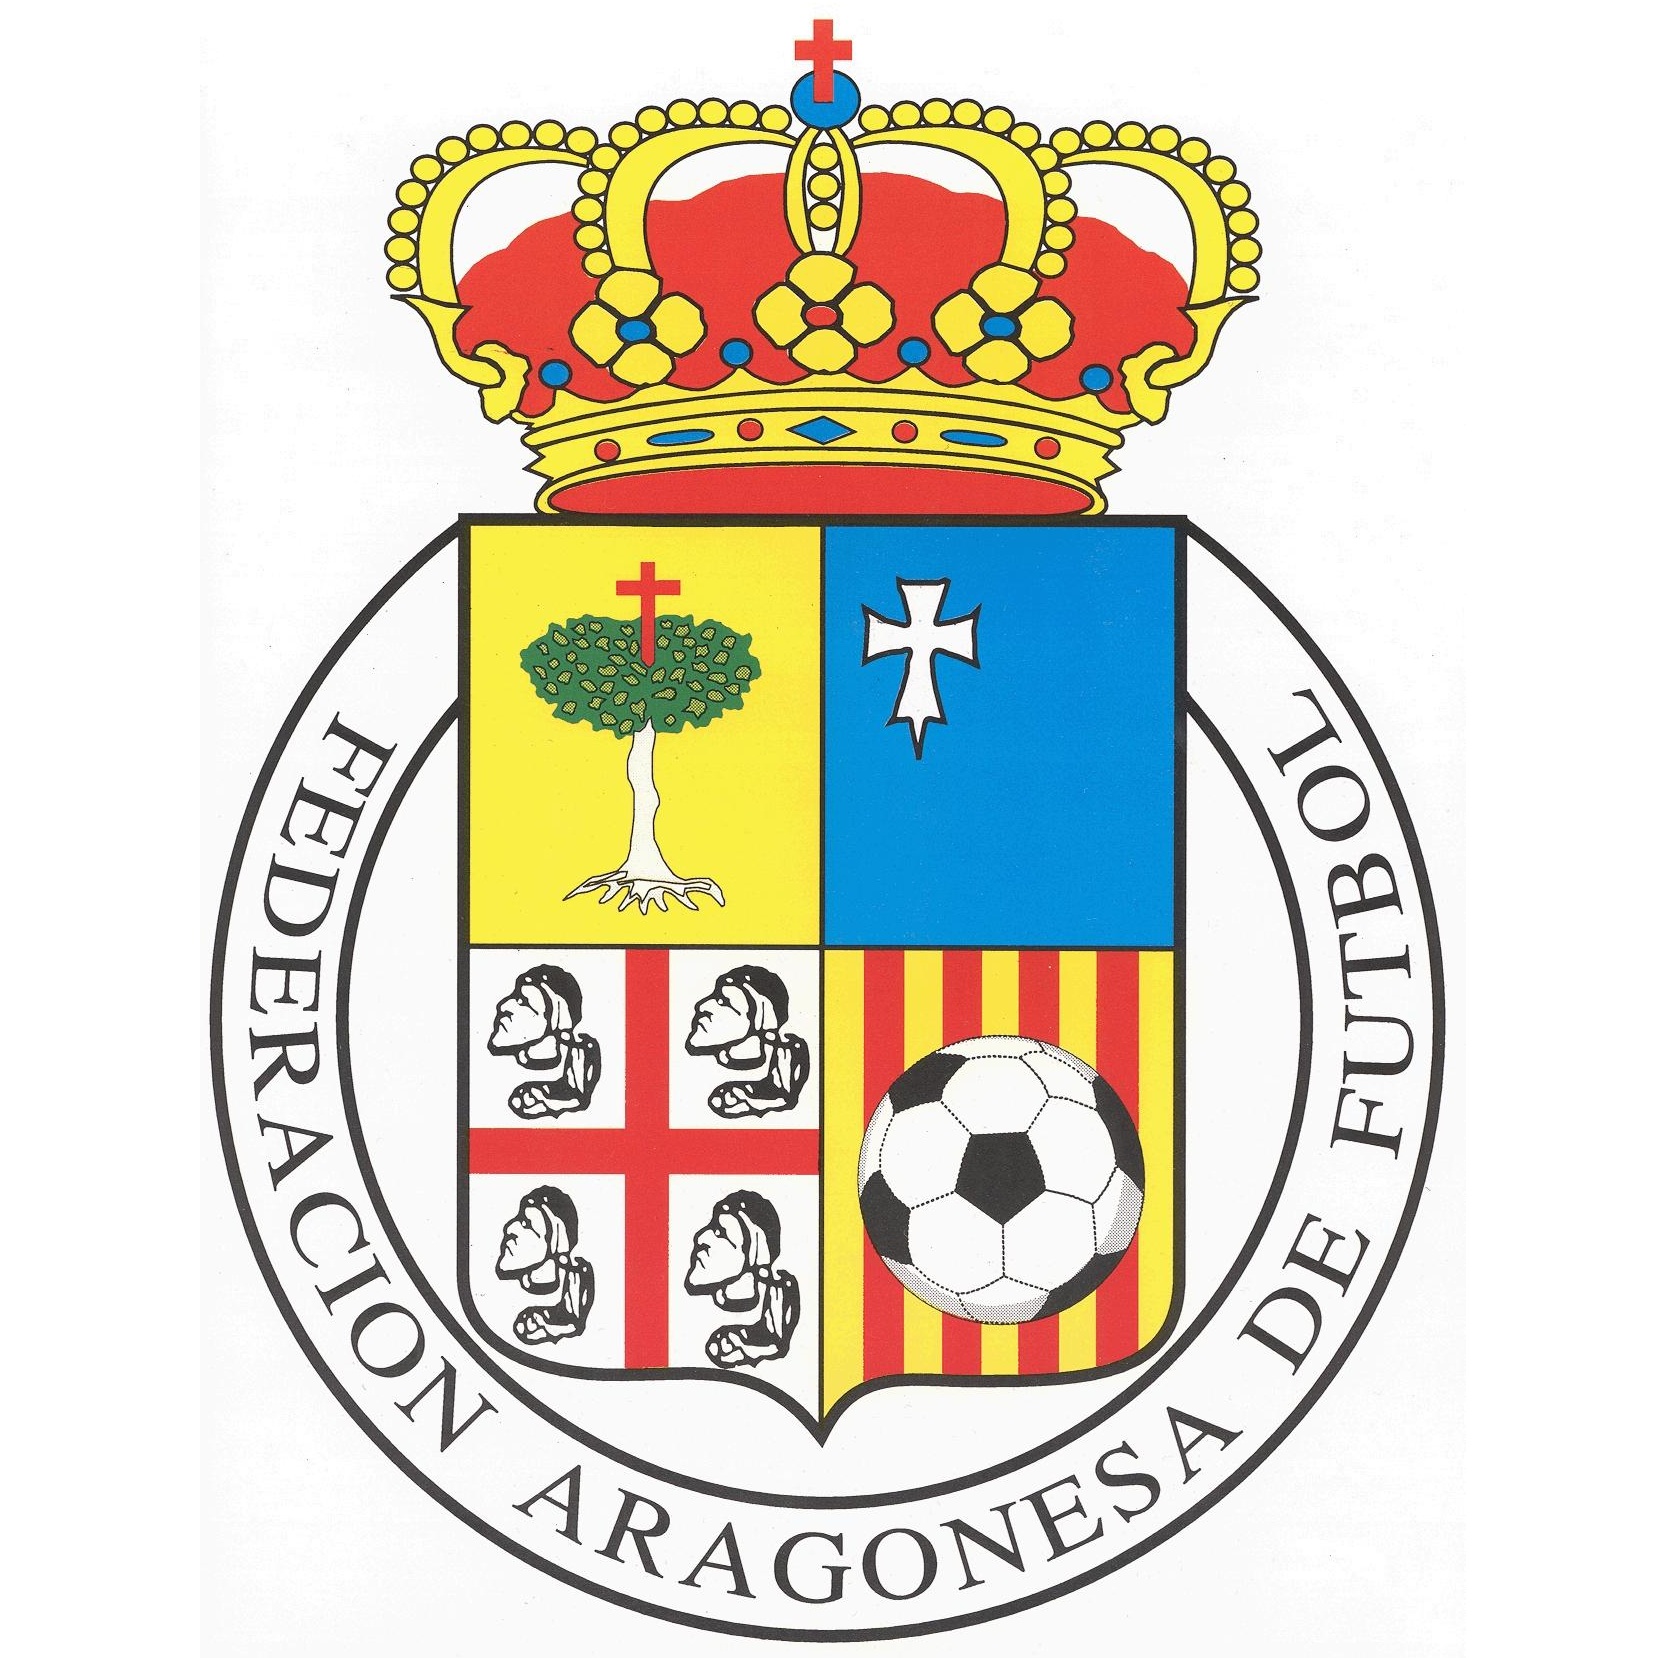 Aragonesa